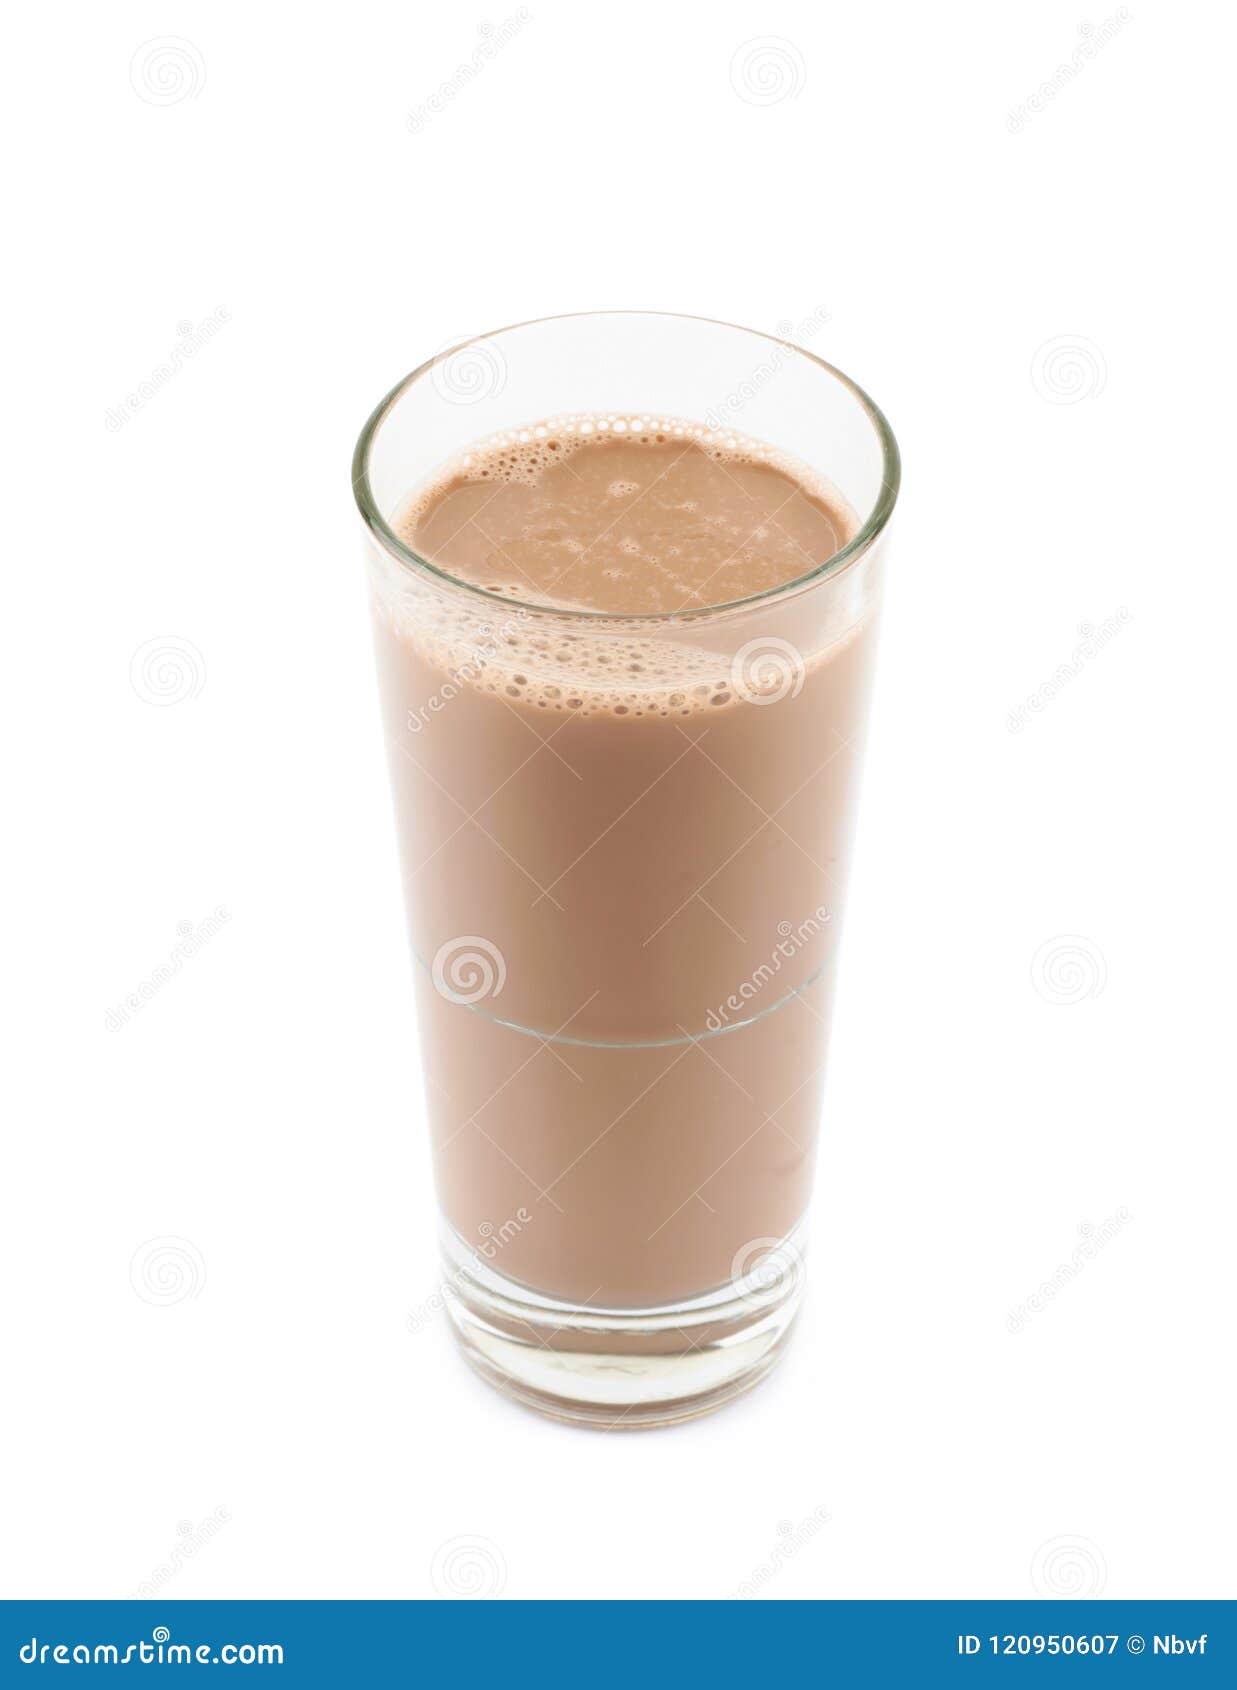 https://thumbs.dreamstime.com/z/tall-glass-chocolate-milk-isolated-tall-glass-chocolate-milk-isolated-over-white-background-120950607.jpg